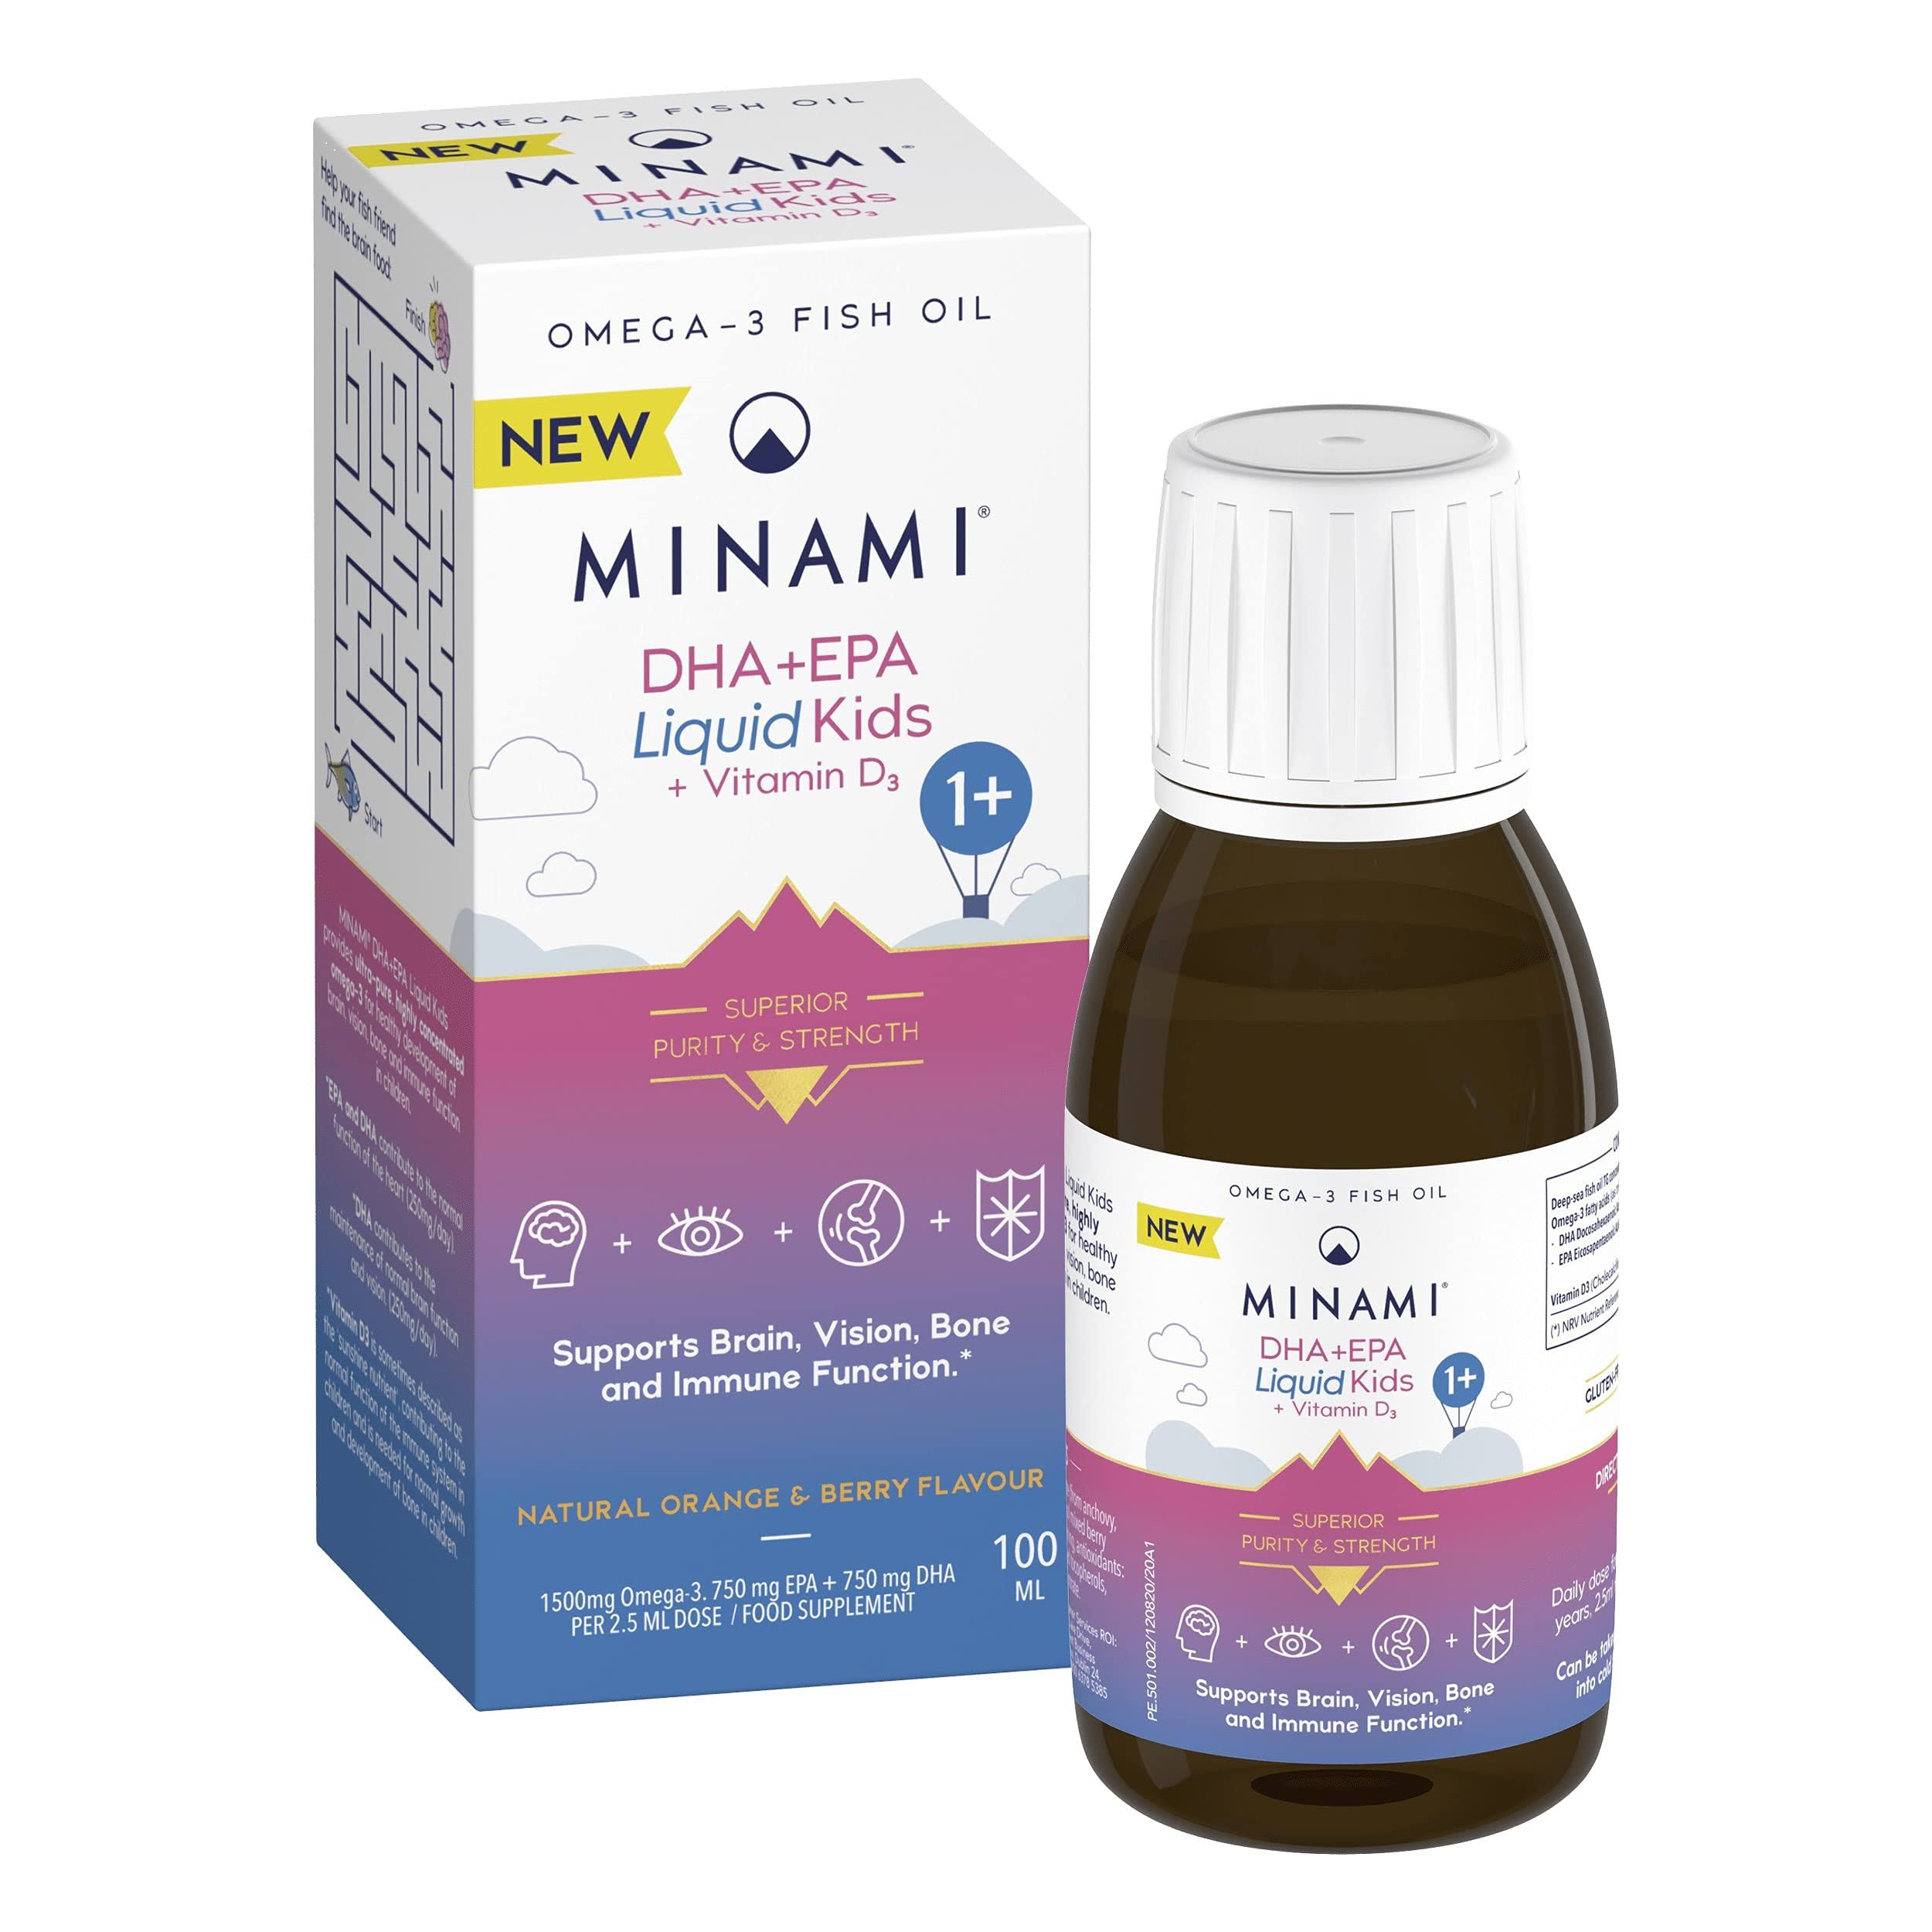 MINAMI DHA+EPA Liquid Kids + Vitamin D3 - 100ml